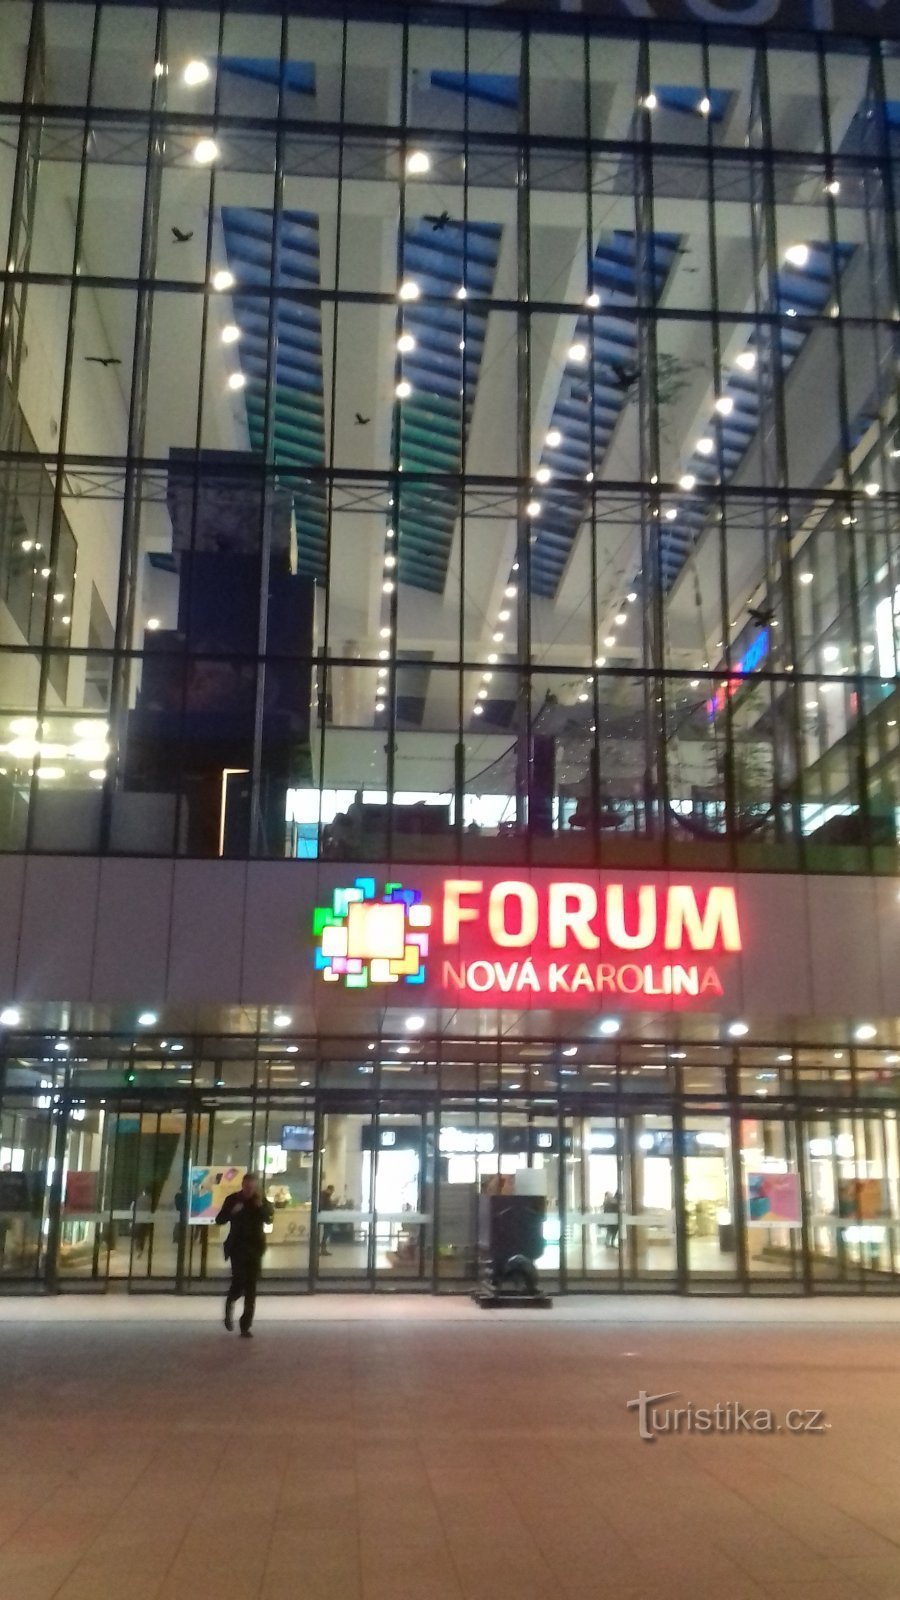 Forum - wejście do centrum handlowego